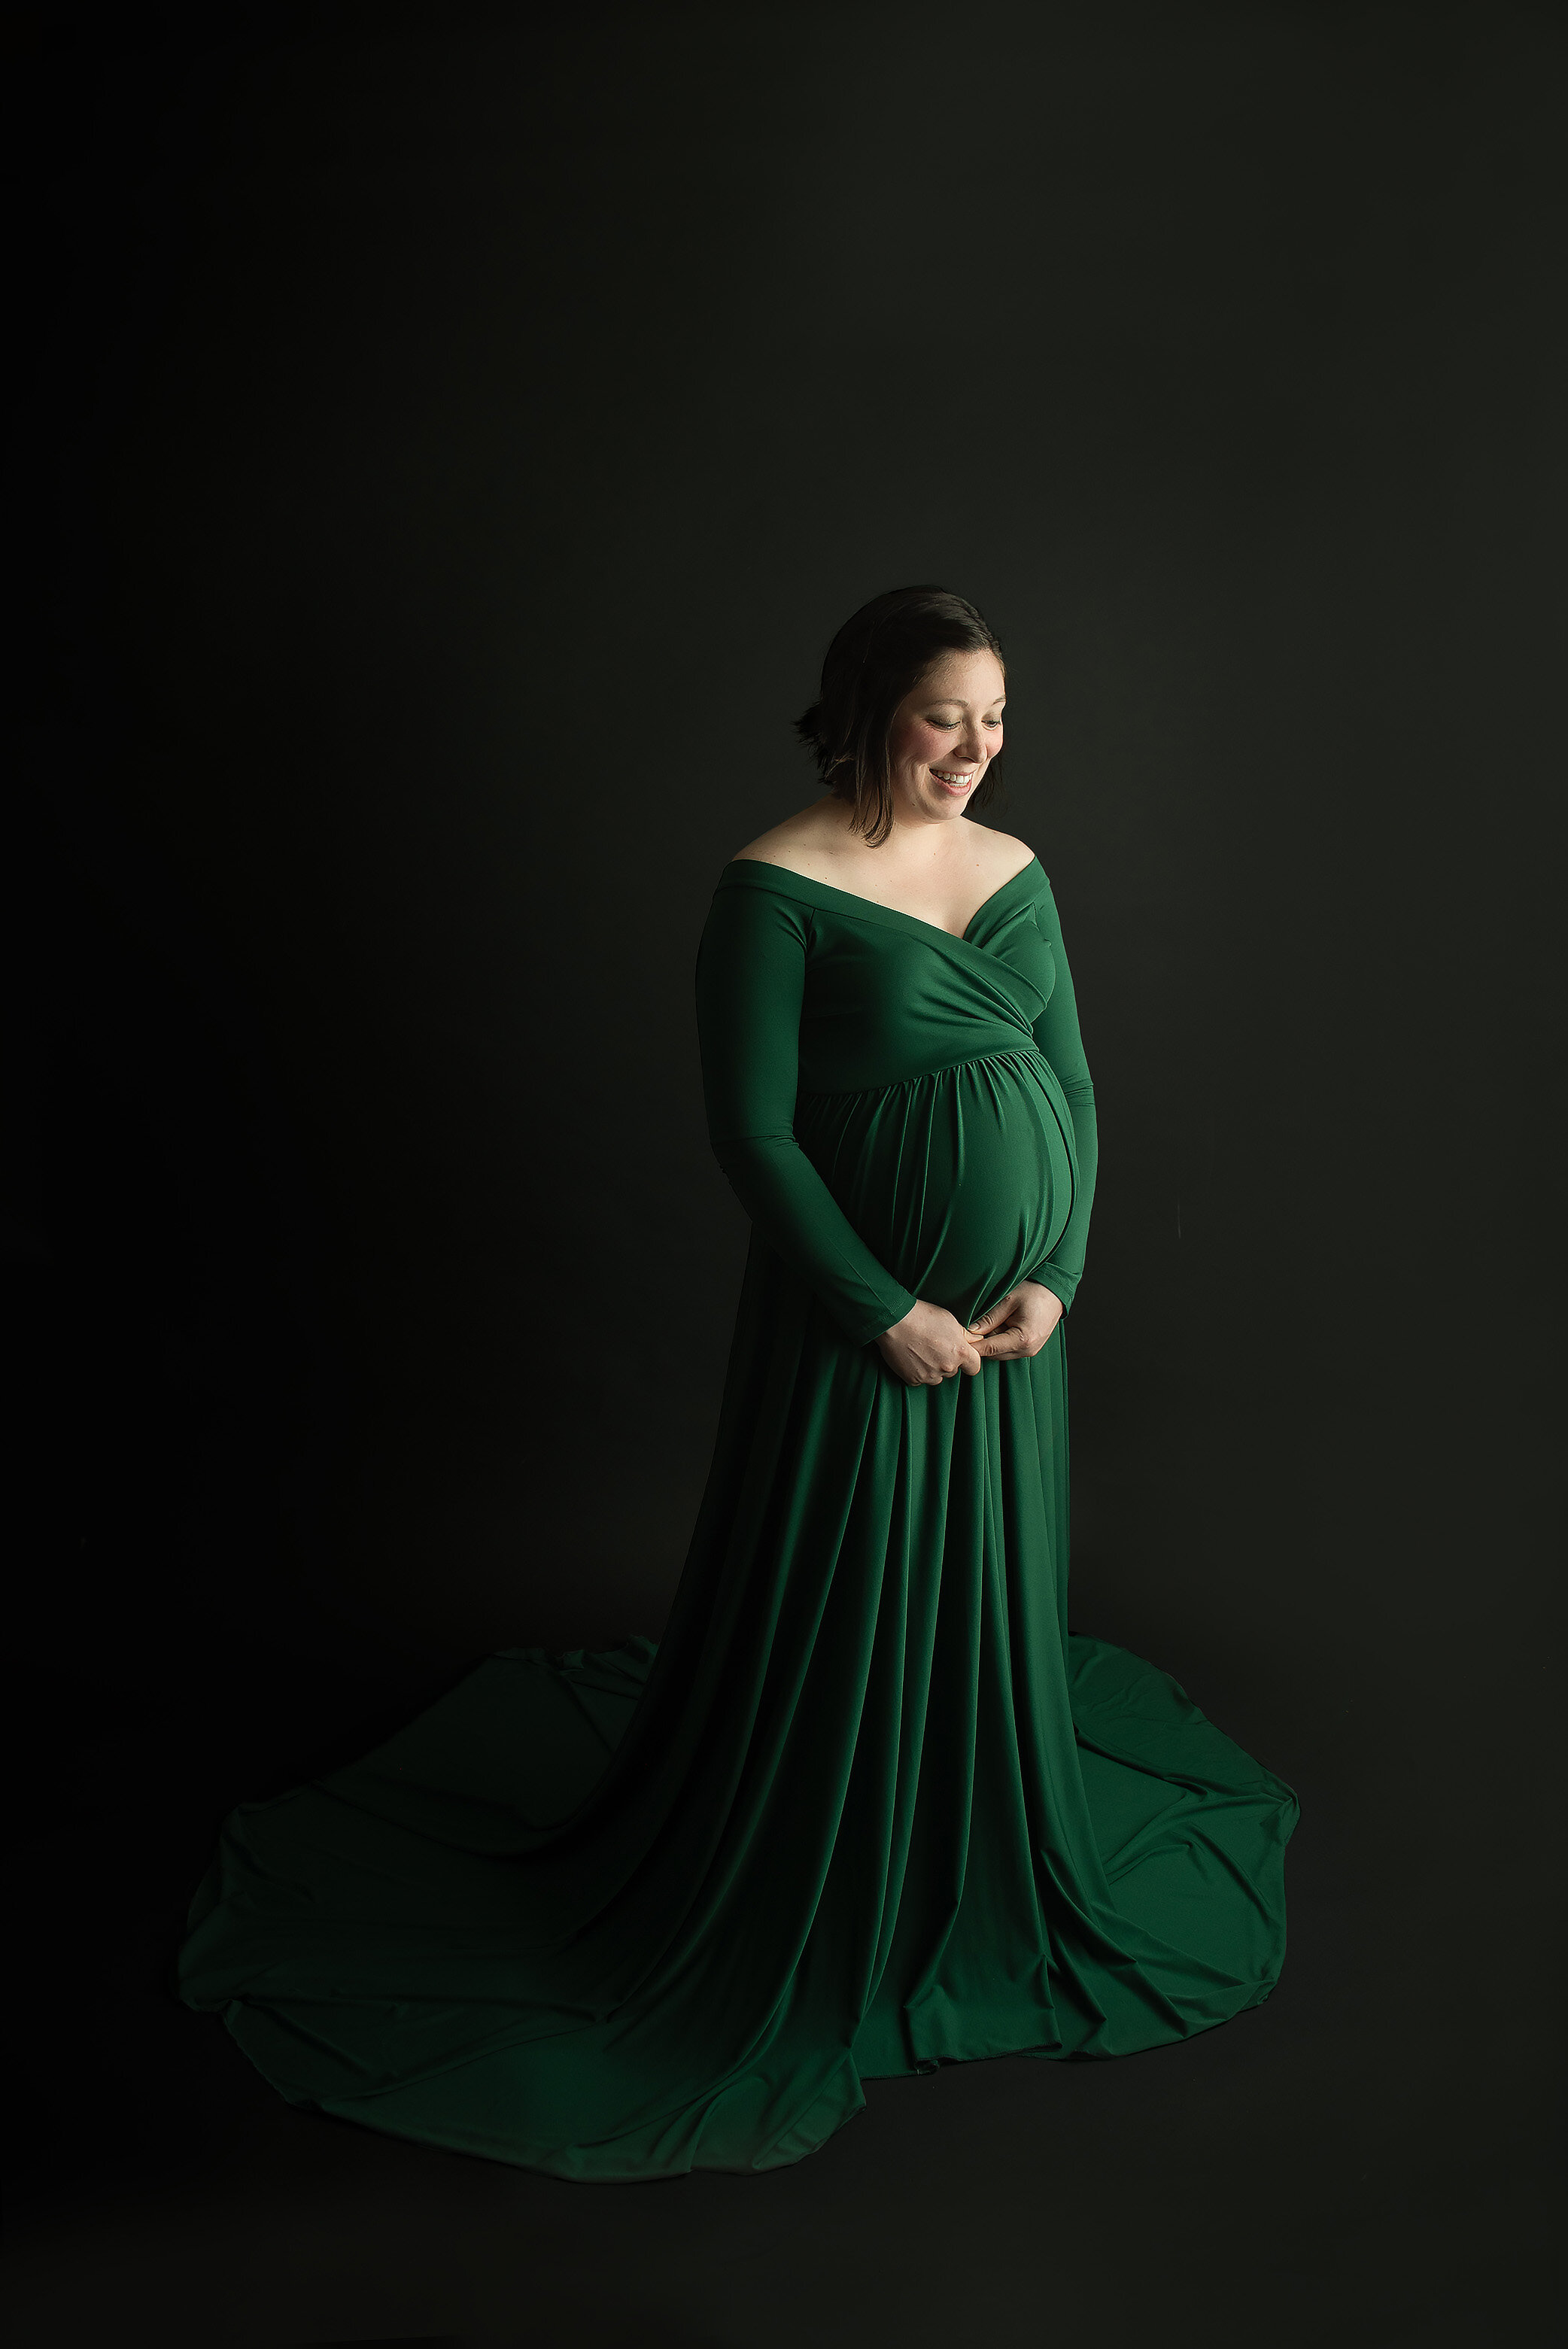 Maternity photographer shrewsbury pa.jpg